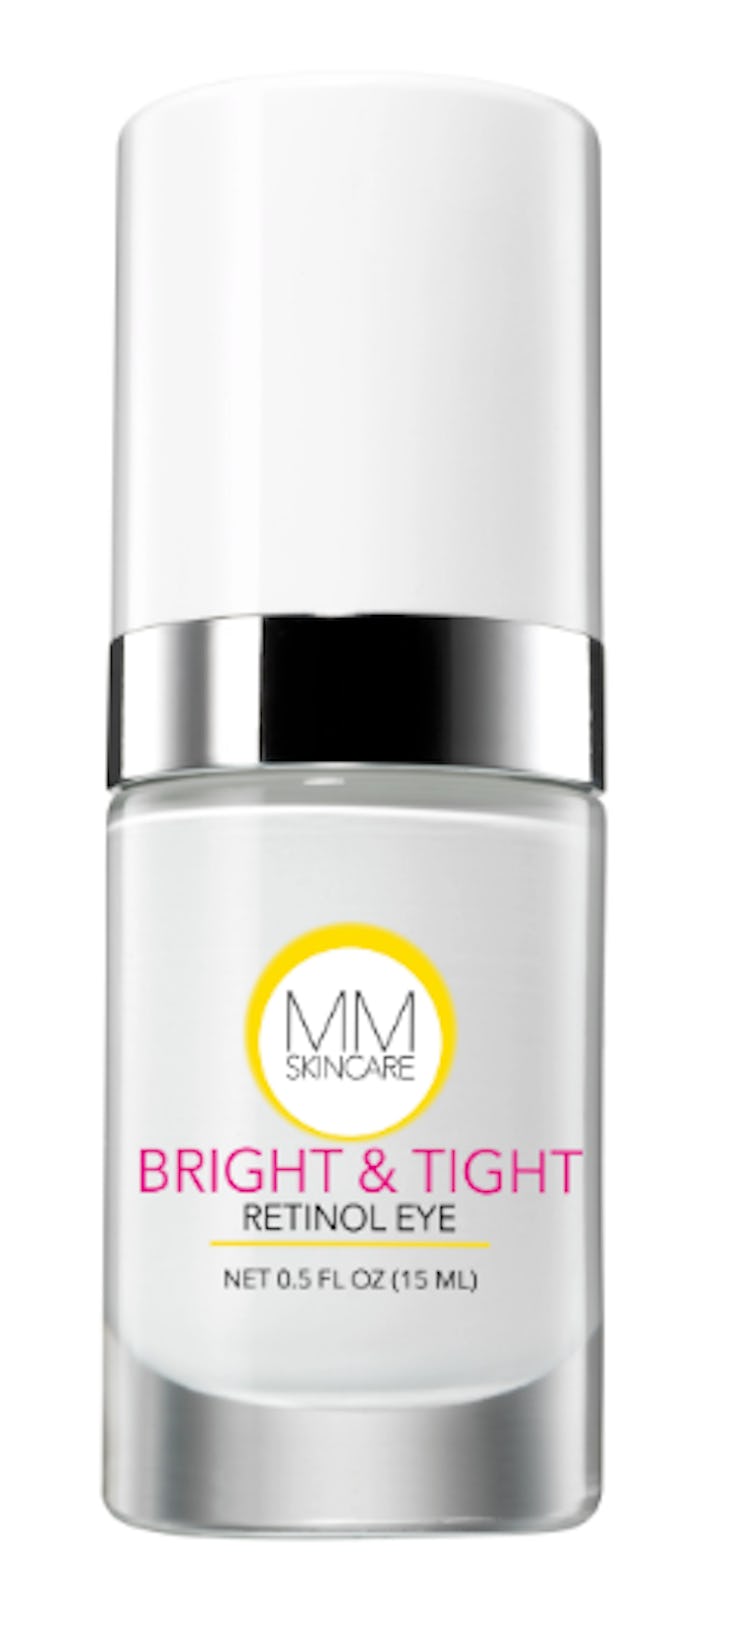  MMSkincare Bright & Tight Retinol Eye Cream